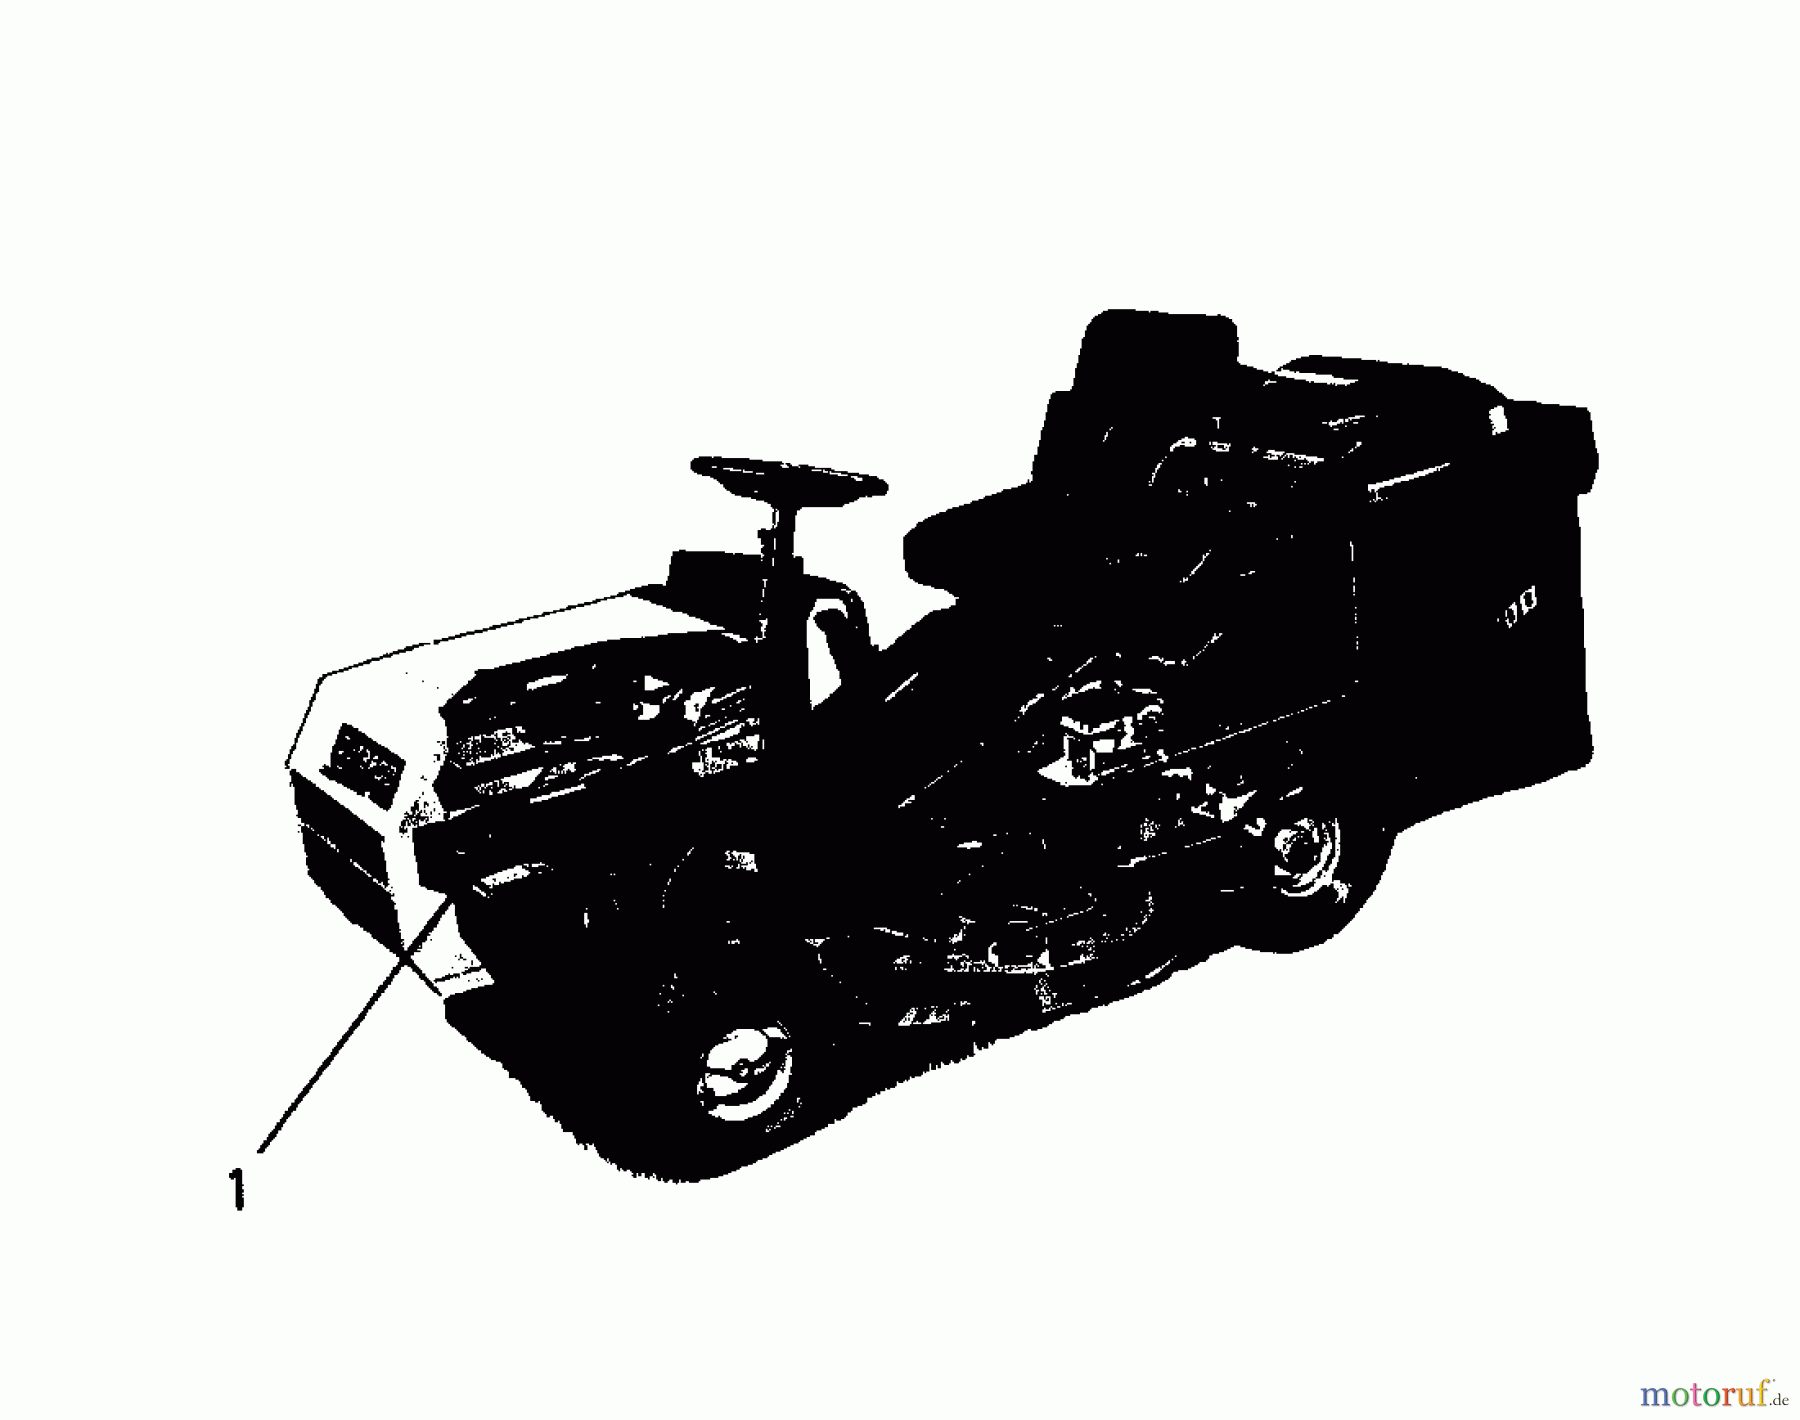  Gutbrod Tracteurs de pelouse Sprint 1000 E 02840.04  (1988) Moteur